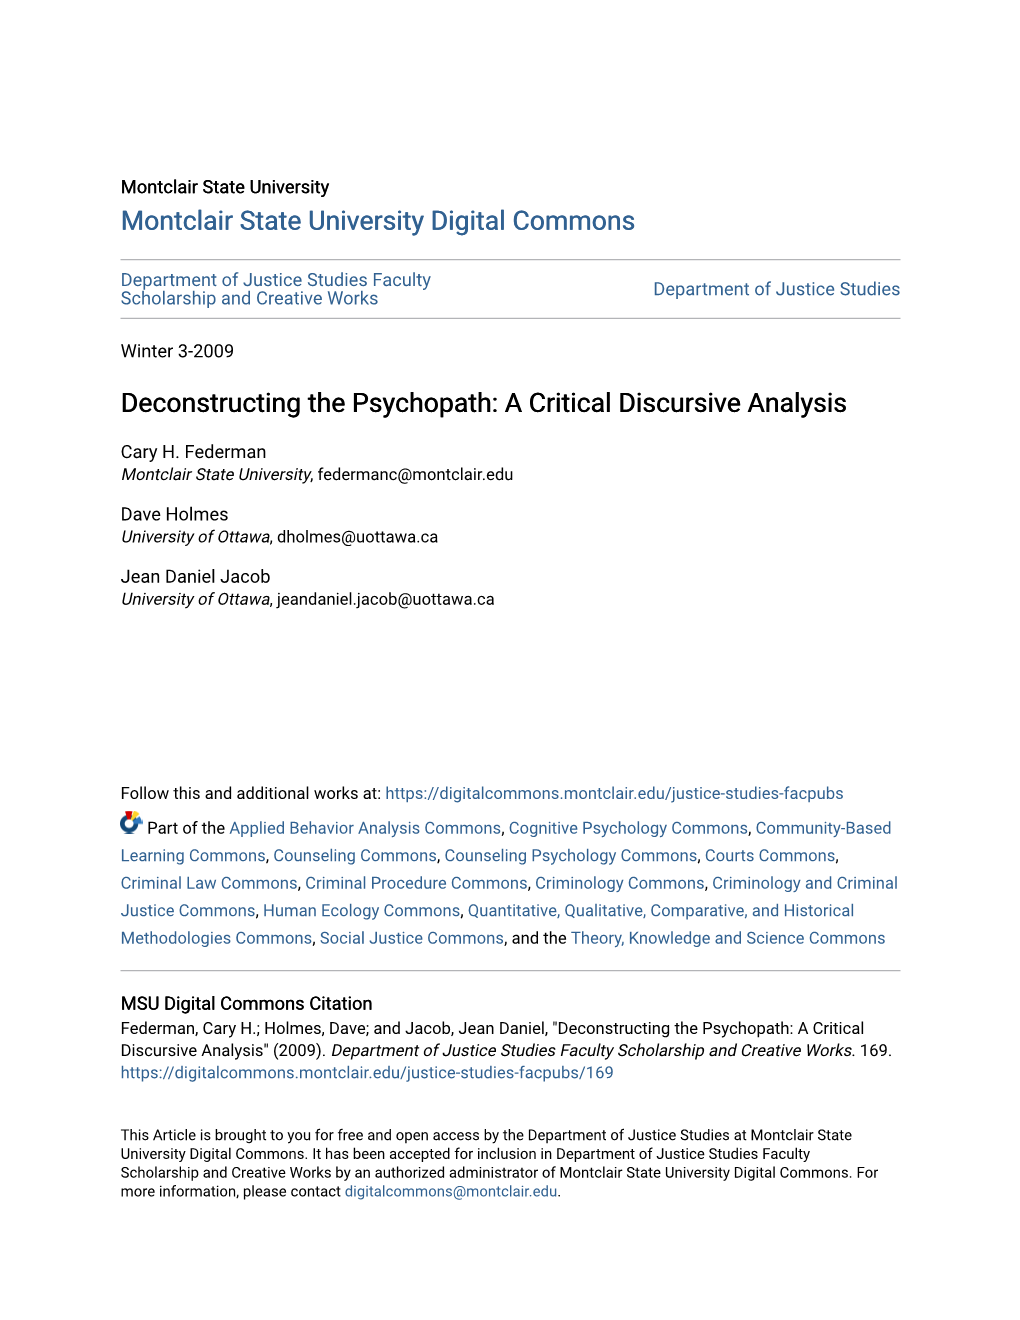 Deconstructing the Psychopath: a Critical Discursive Analysis